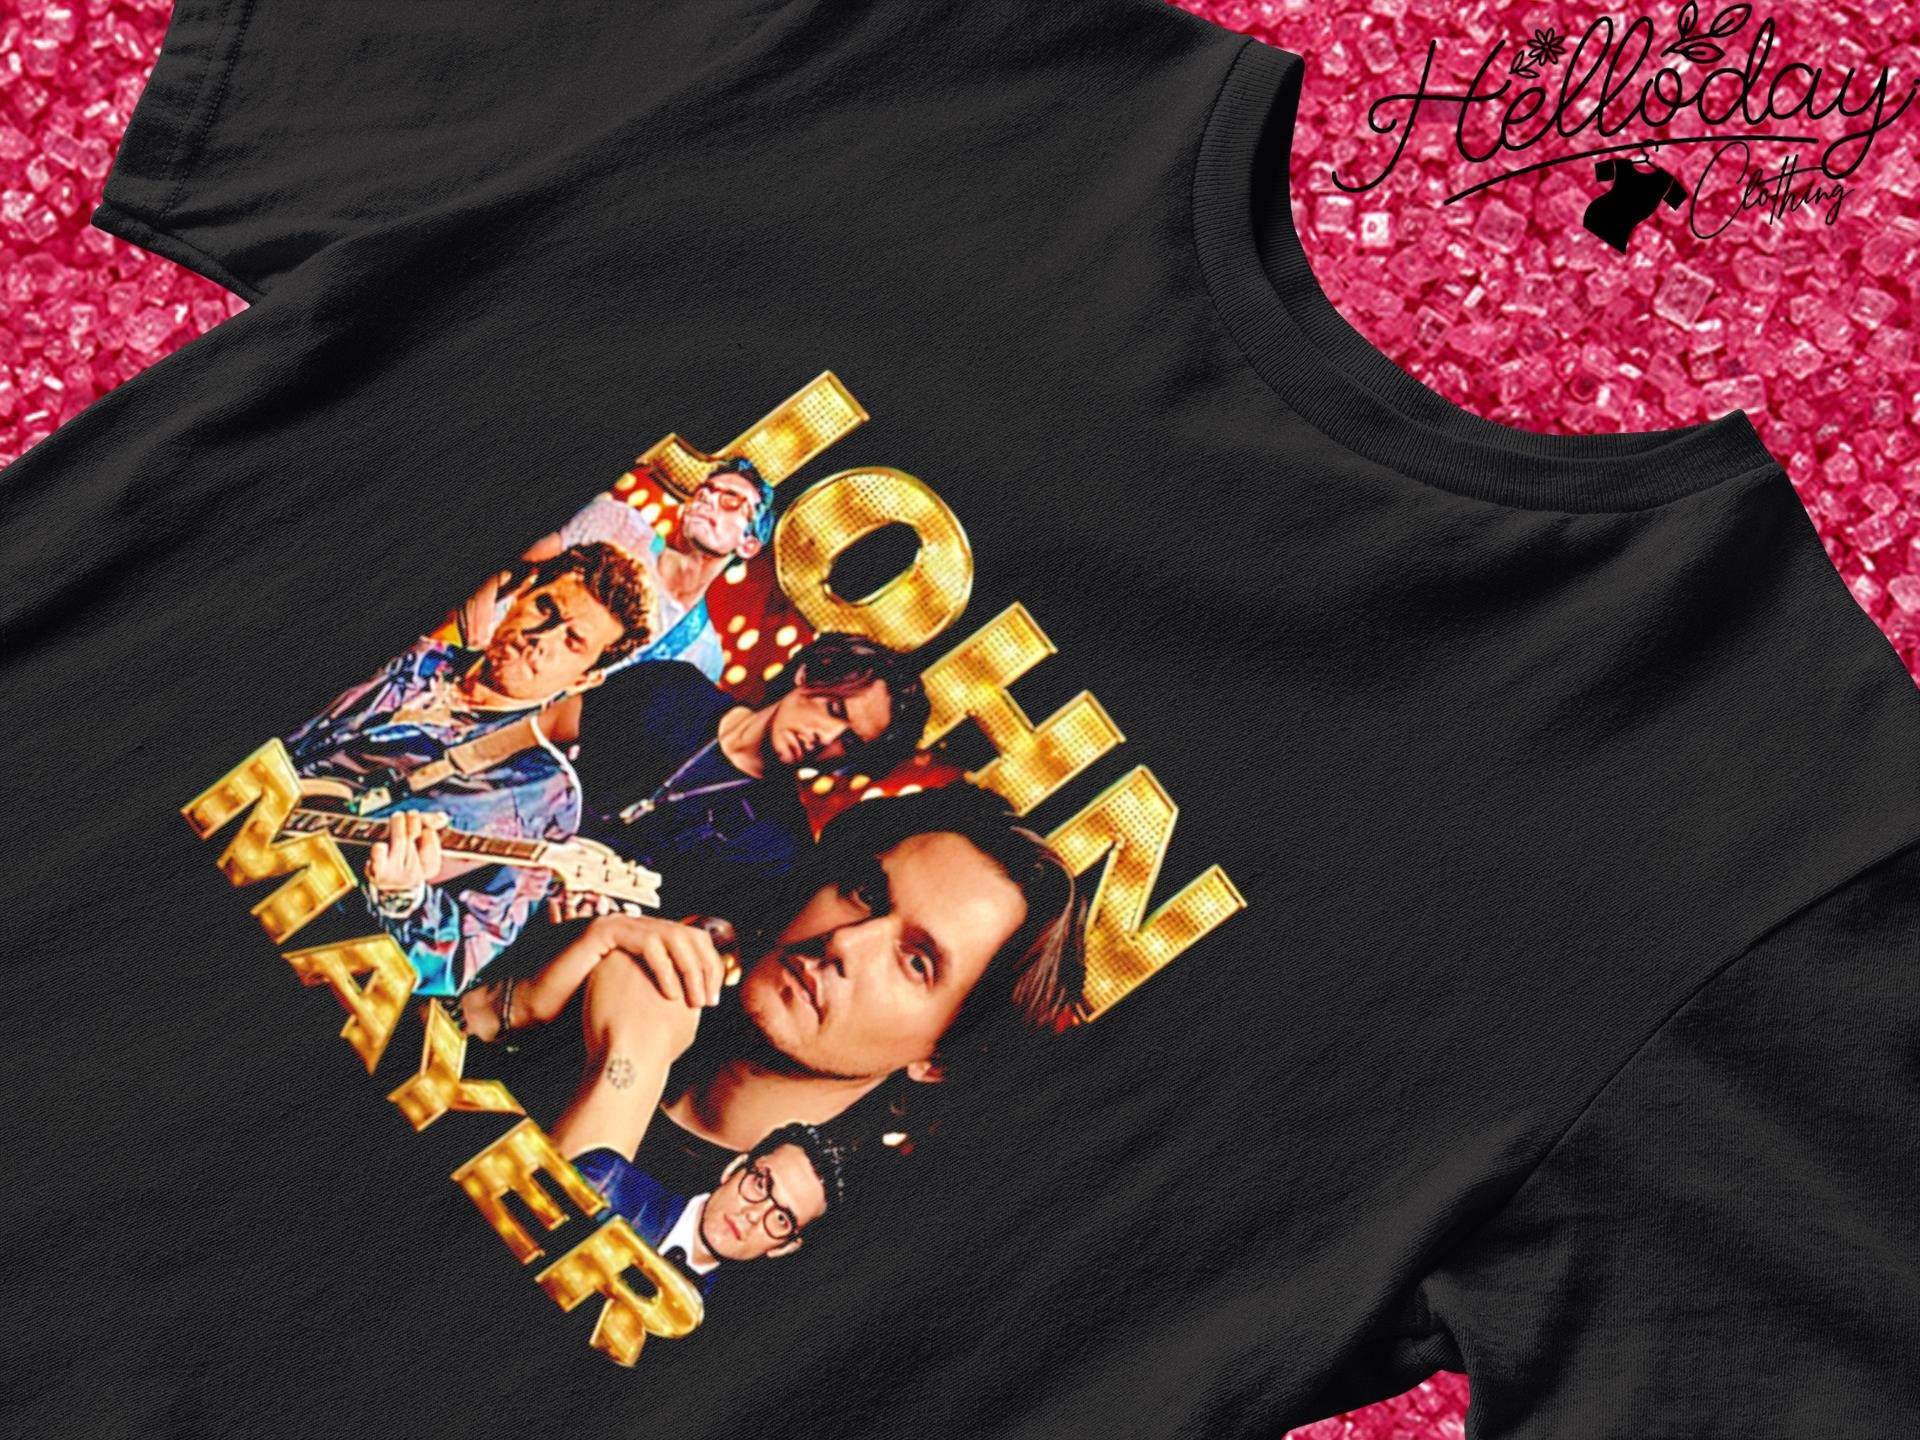 John Mayer shirt